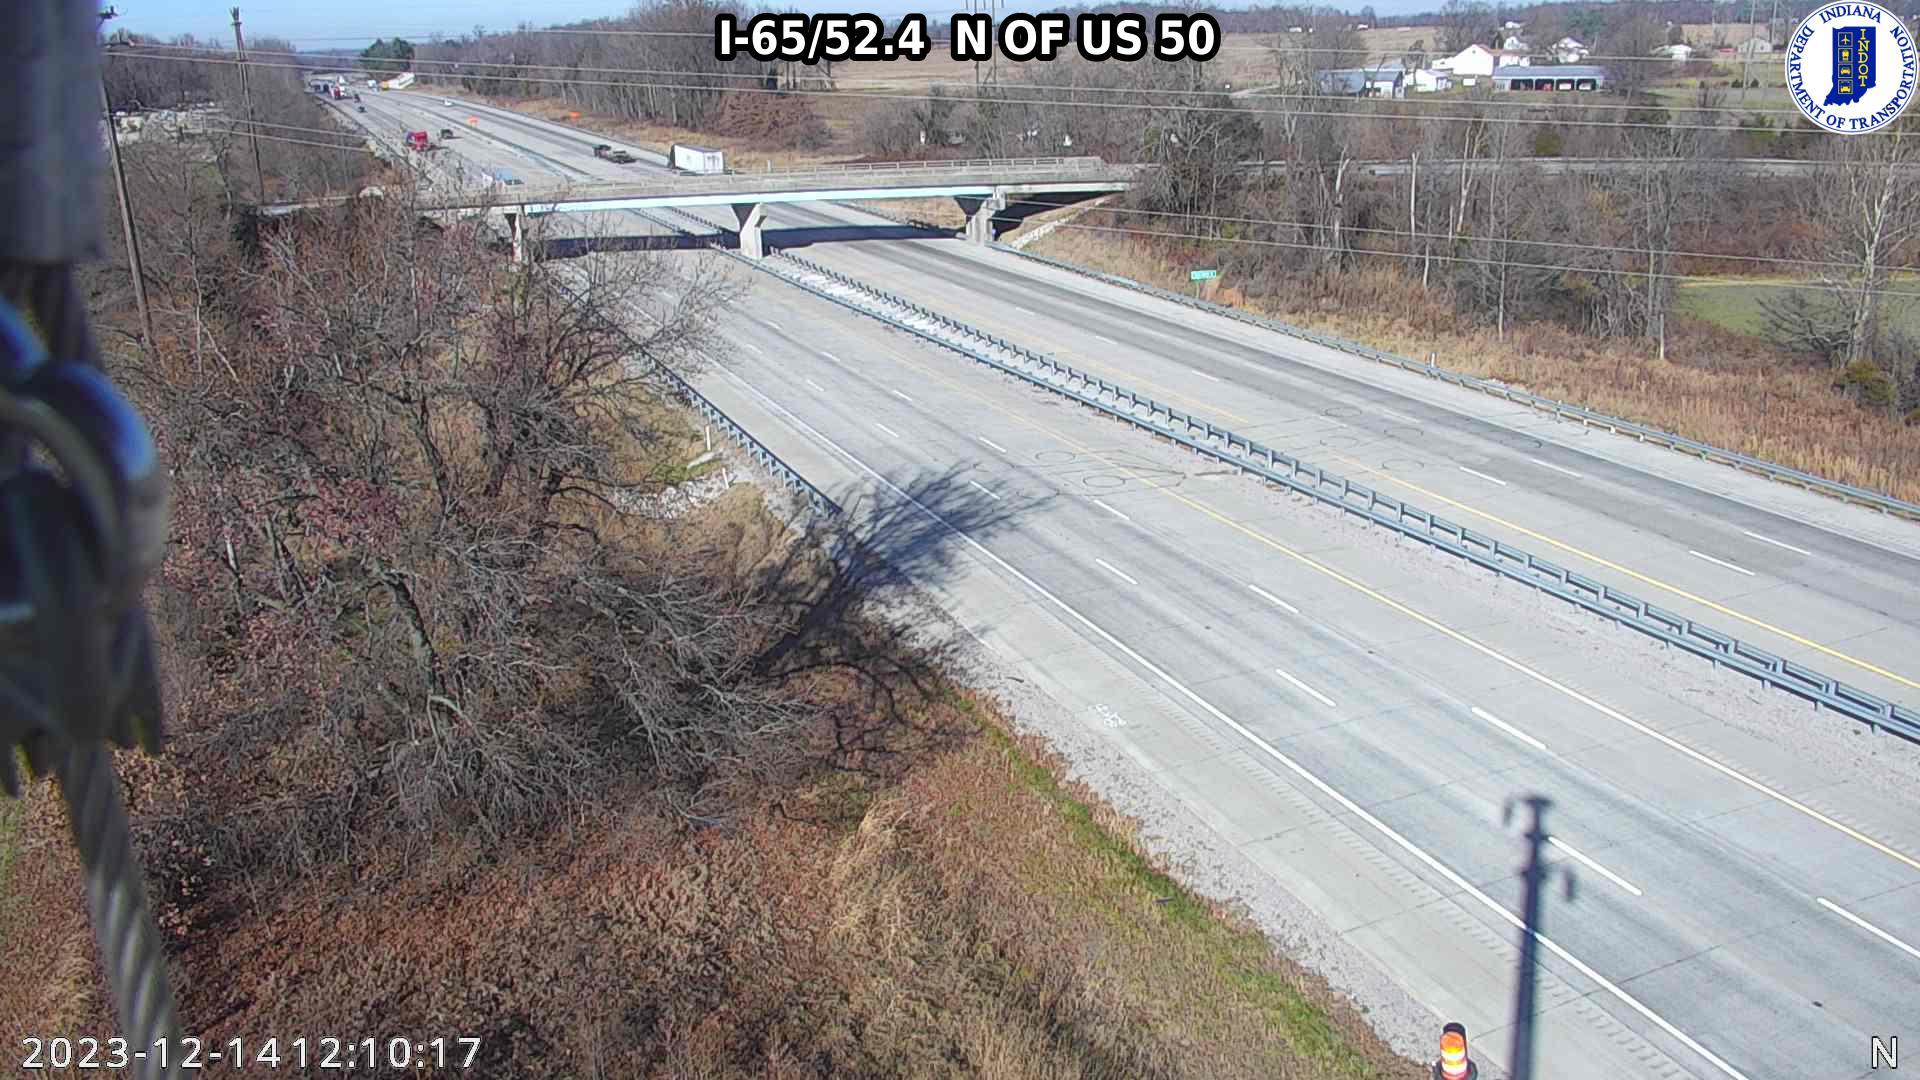 Traffic Cam Rockford: I-65: I-65/52.4 N OF US 50: I-65/52.4 N OF US 50